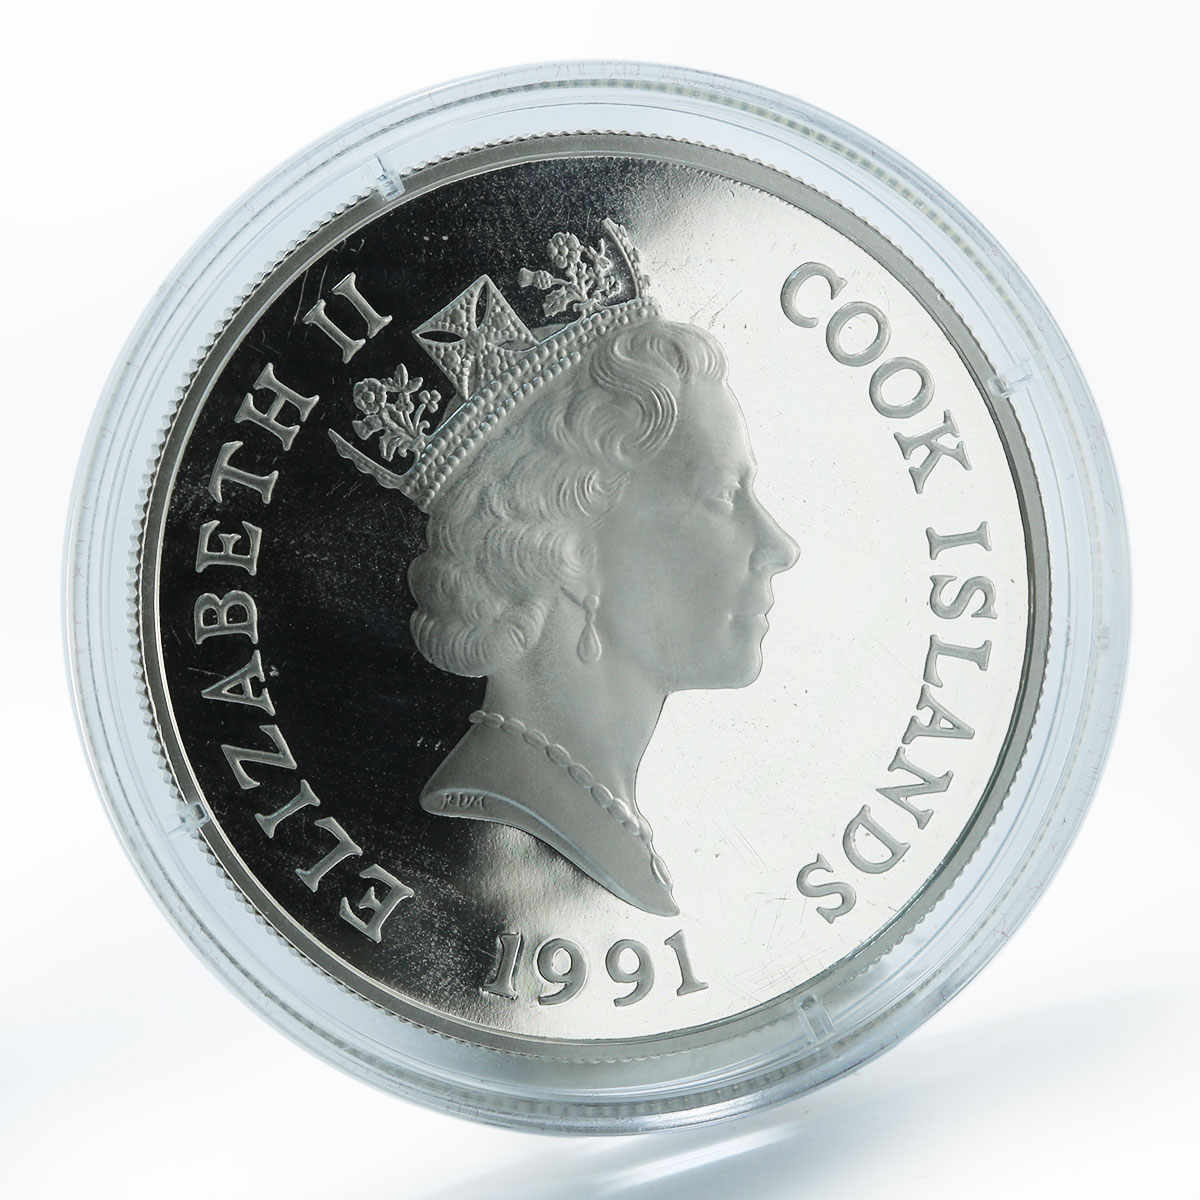 Cook Island 50 Dollars Endangered World Wildlife Kangaroo proof silver coin 1991